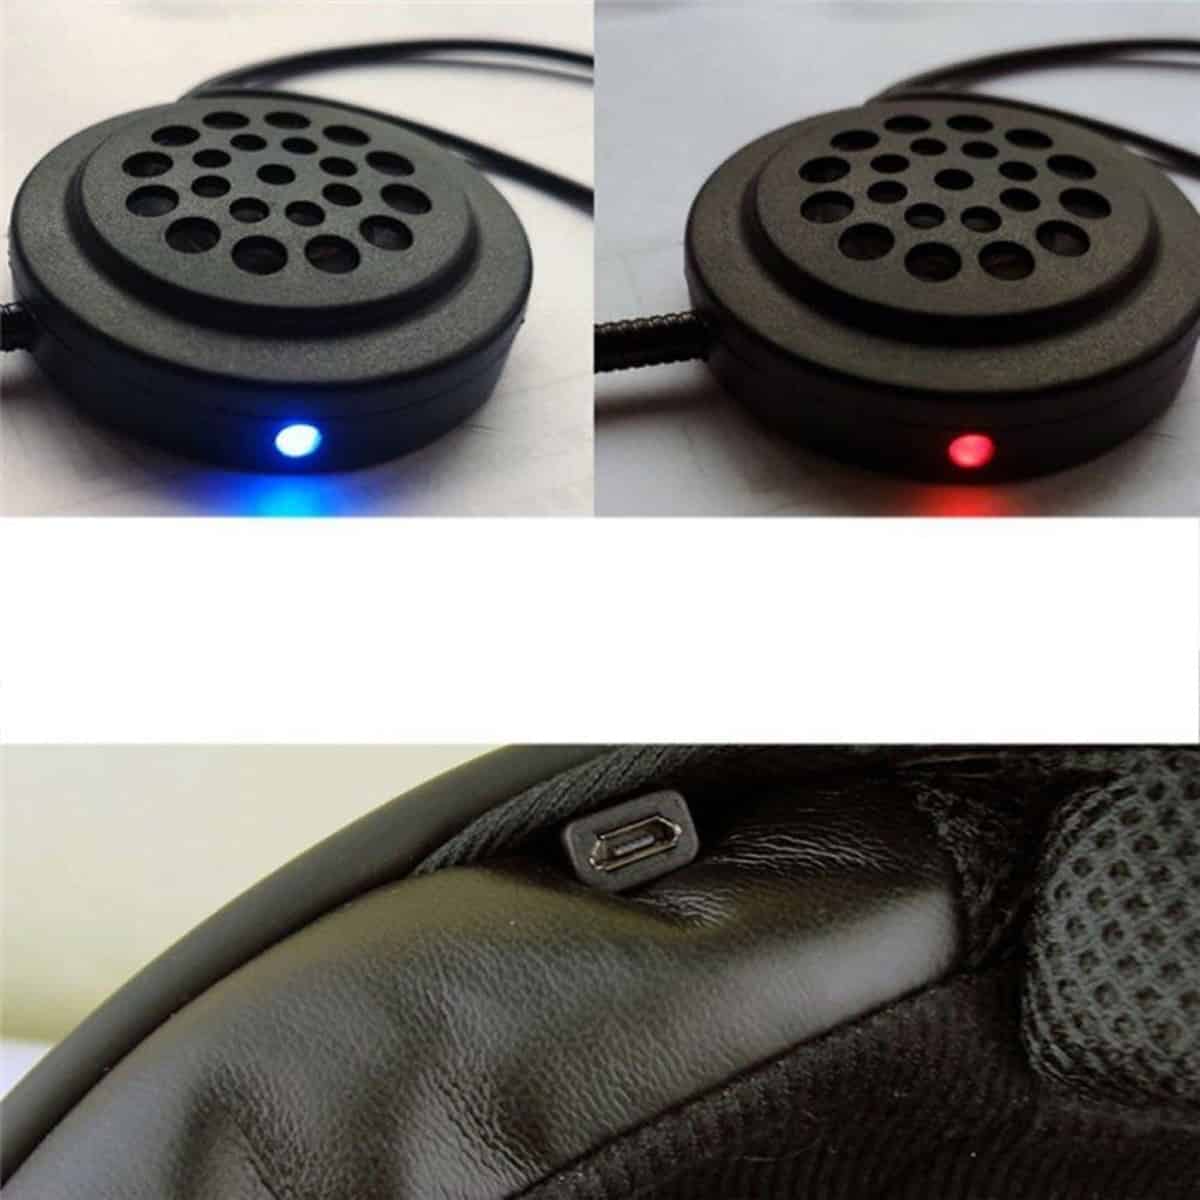 Moto Helmet Bluetooth 5.0 Headset Anti-interference For Motorcycle Helmet Riding Intercom Moto Hands Free Headphone MP3 Speakers